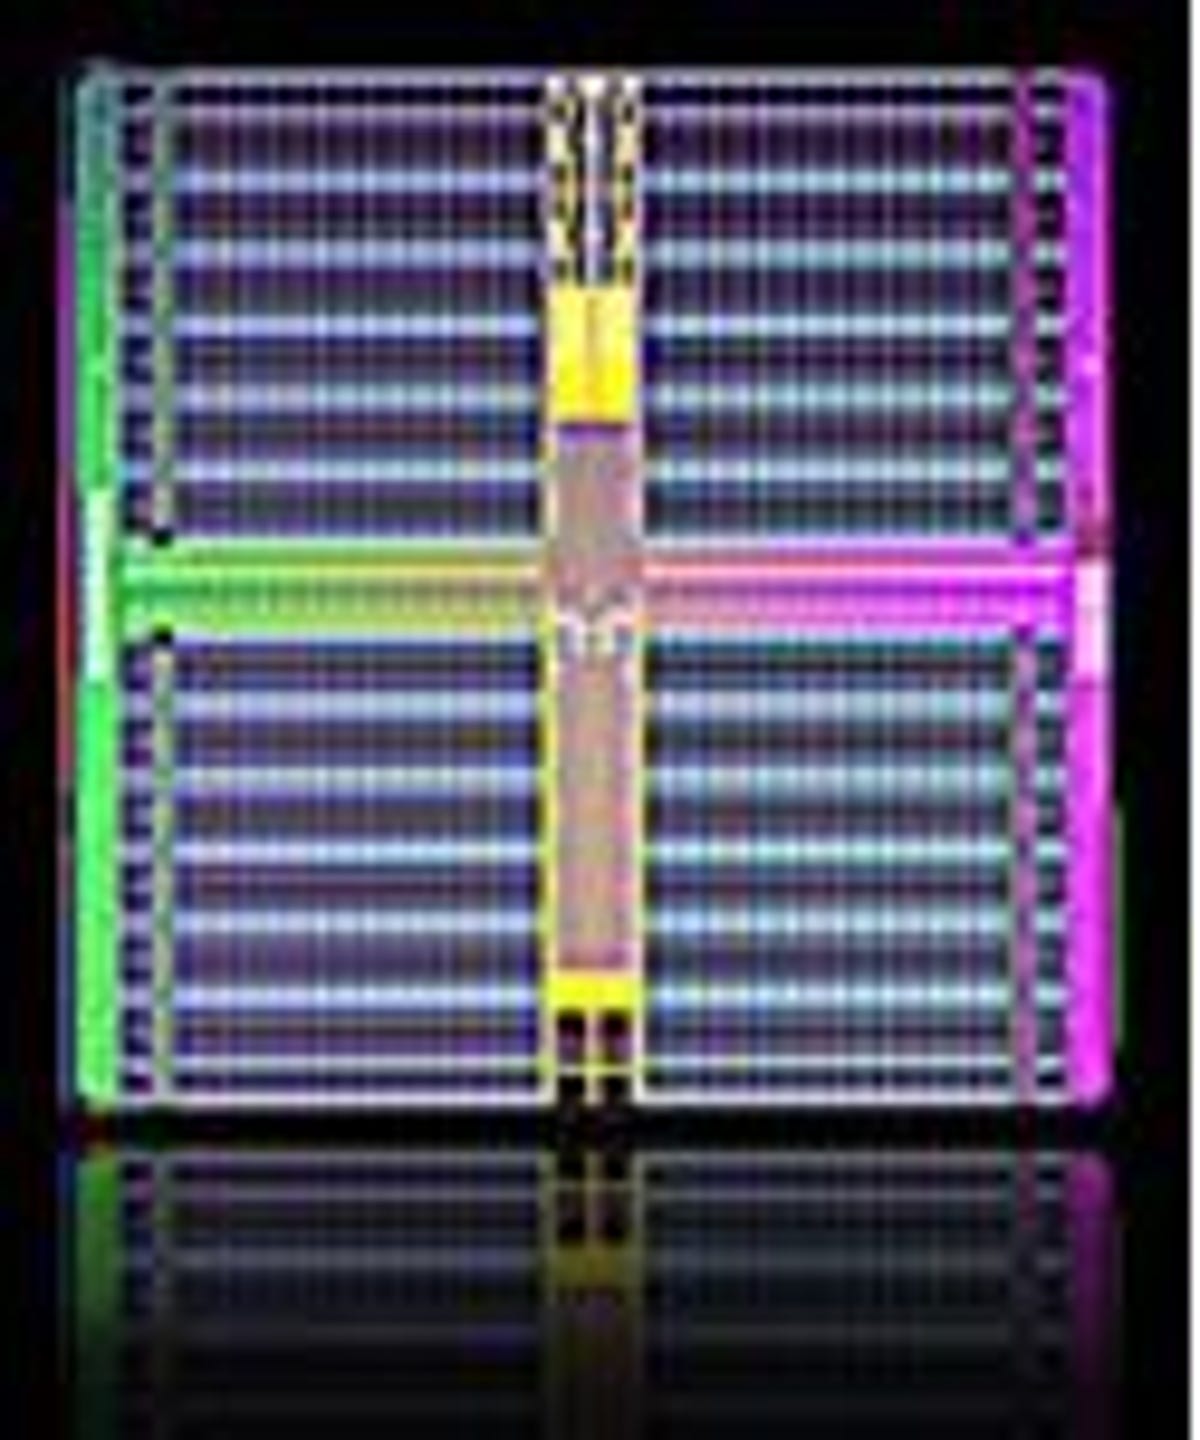 Intel 32-nanometer SRAM chip